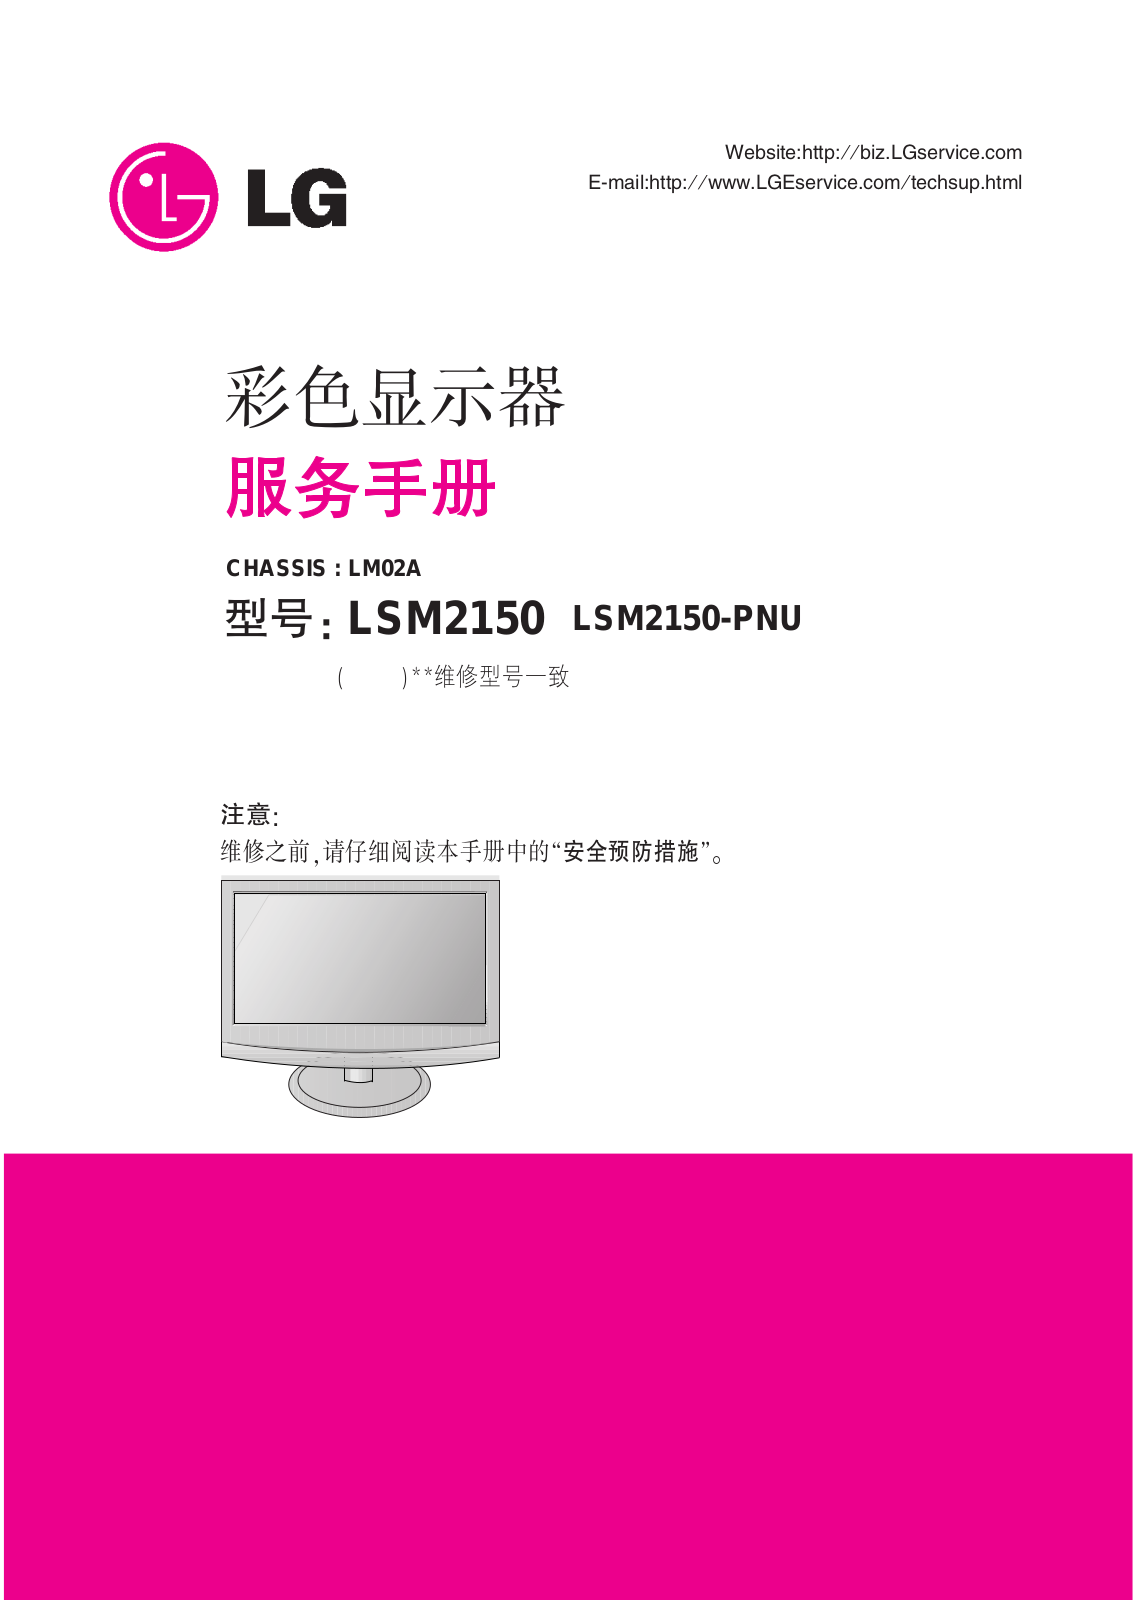 LG LSM2150, LSM2150-PNU service manual